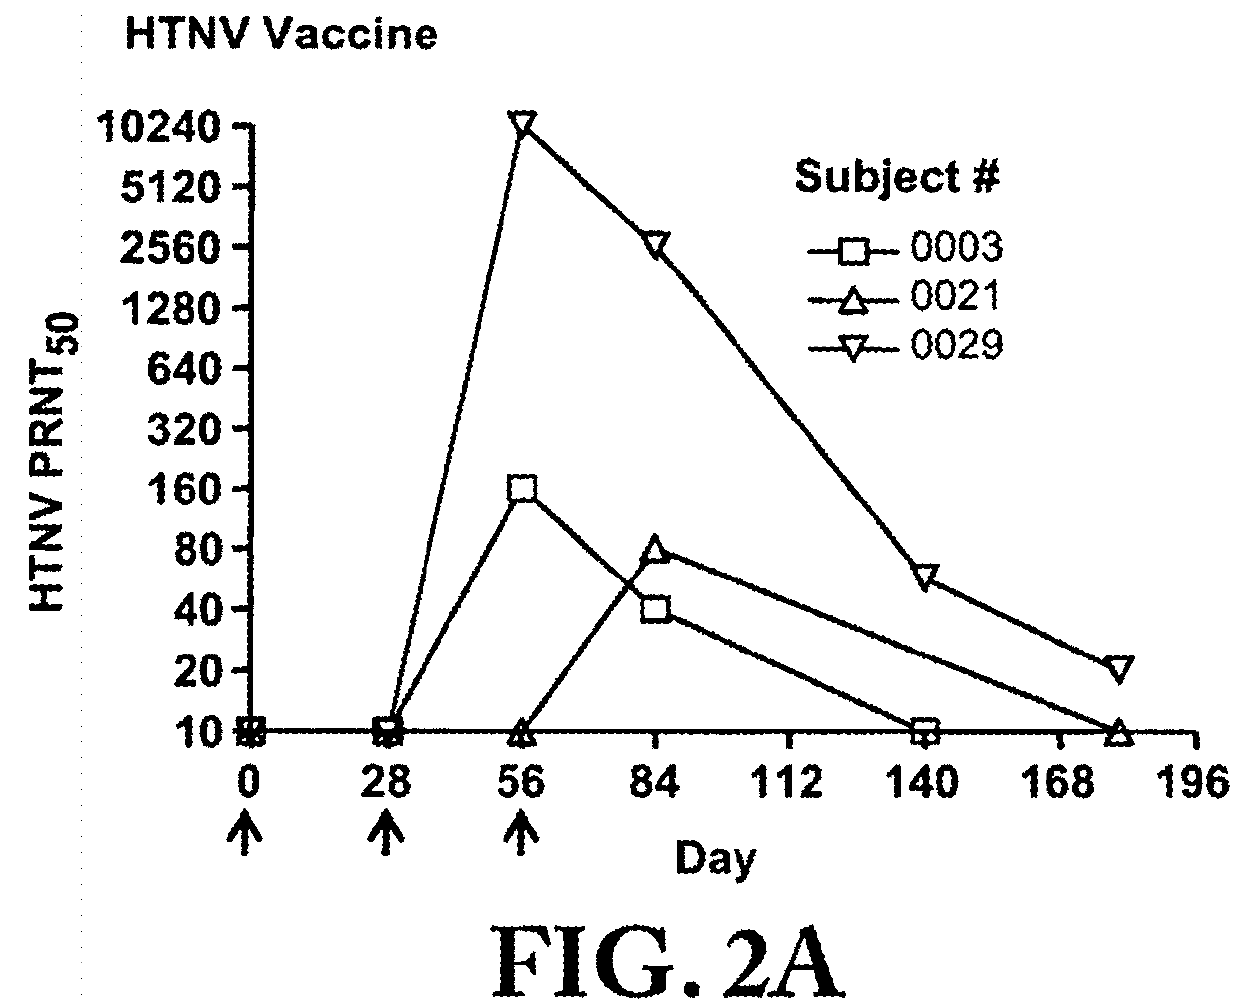 Gene optimized hantaan virus M segment DNA vaccine for hemorrhagic fever with renal syndrome